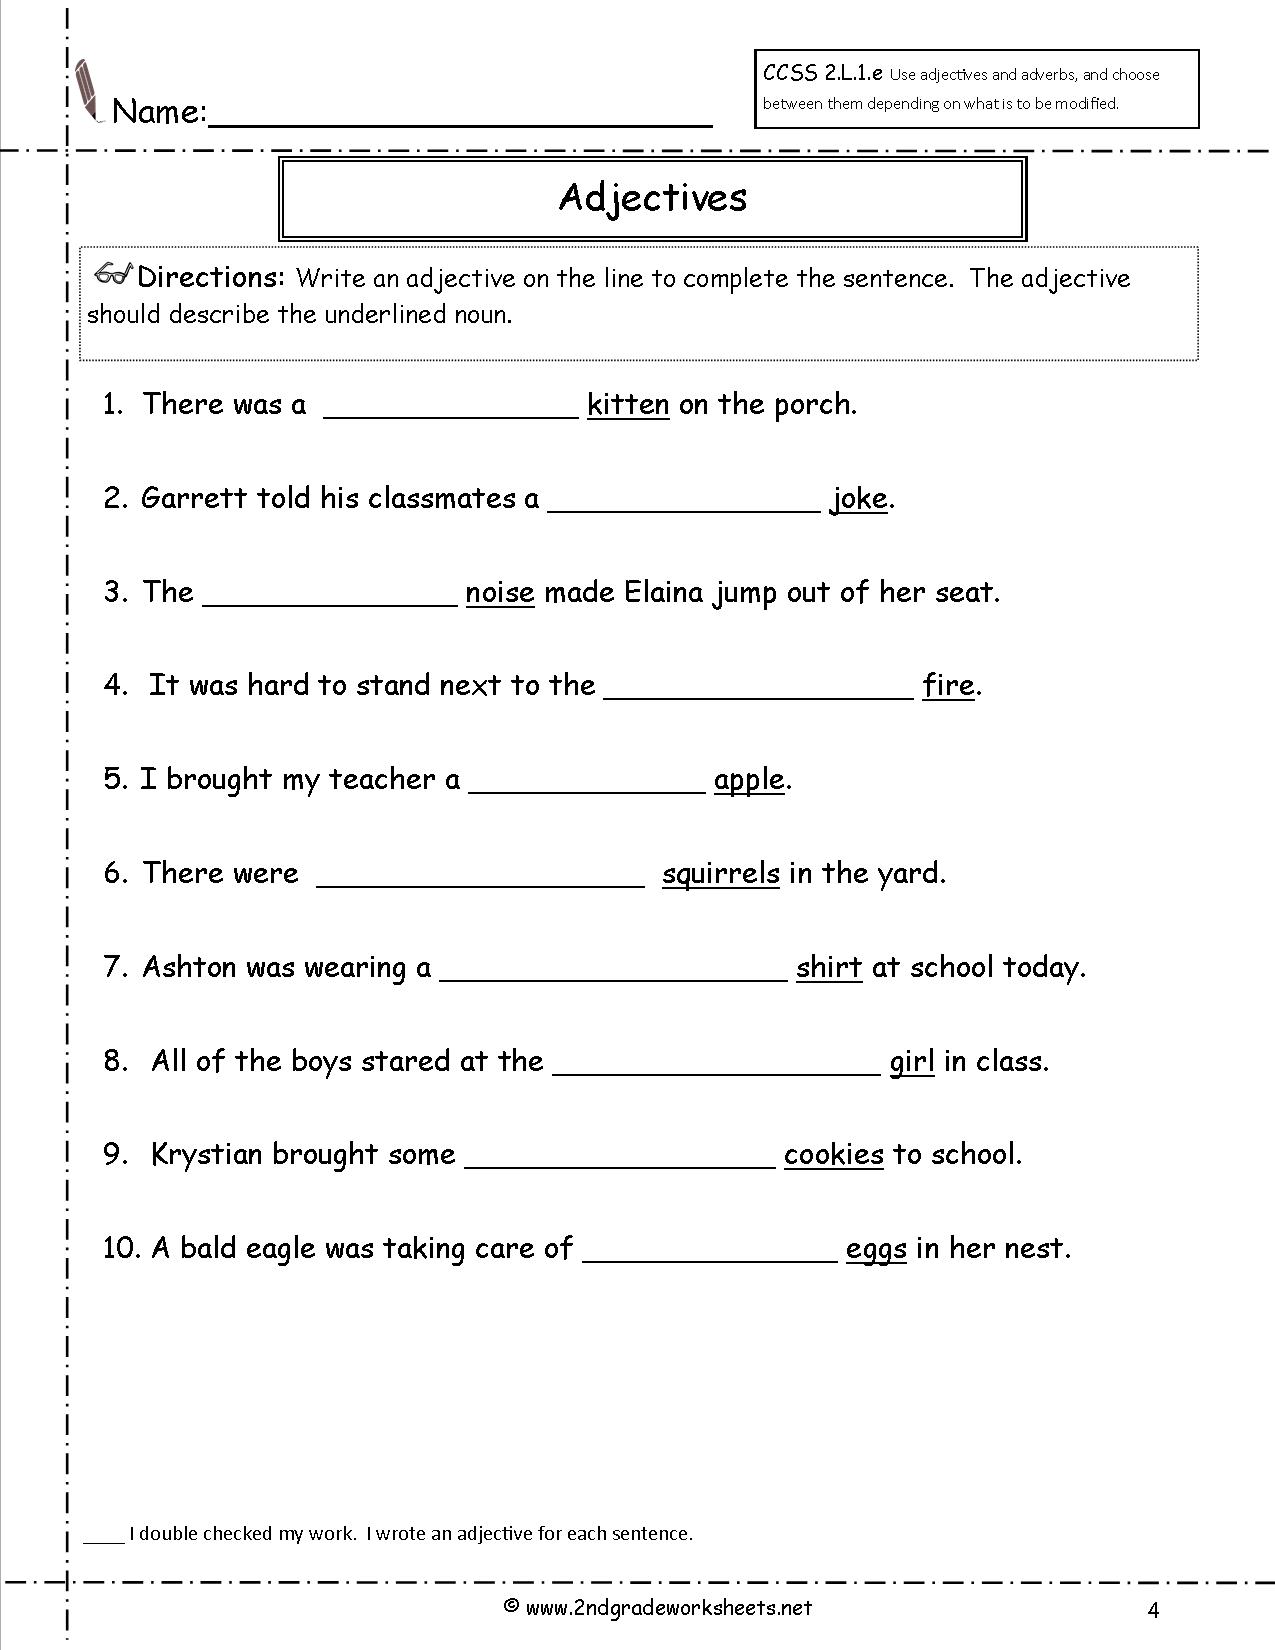 17 Adjectives Exercises Worksheets Worksheeto